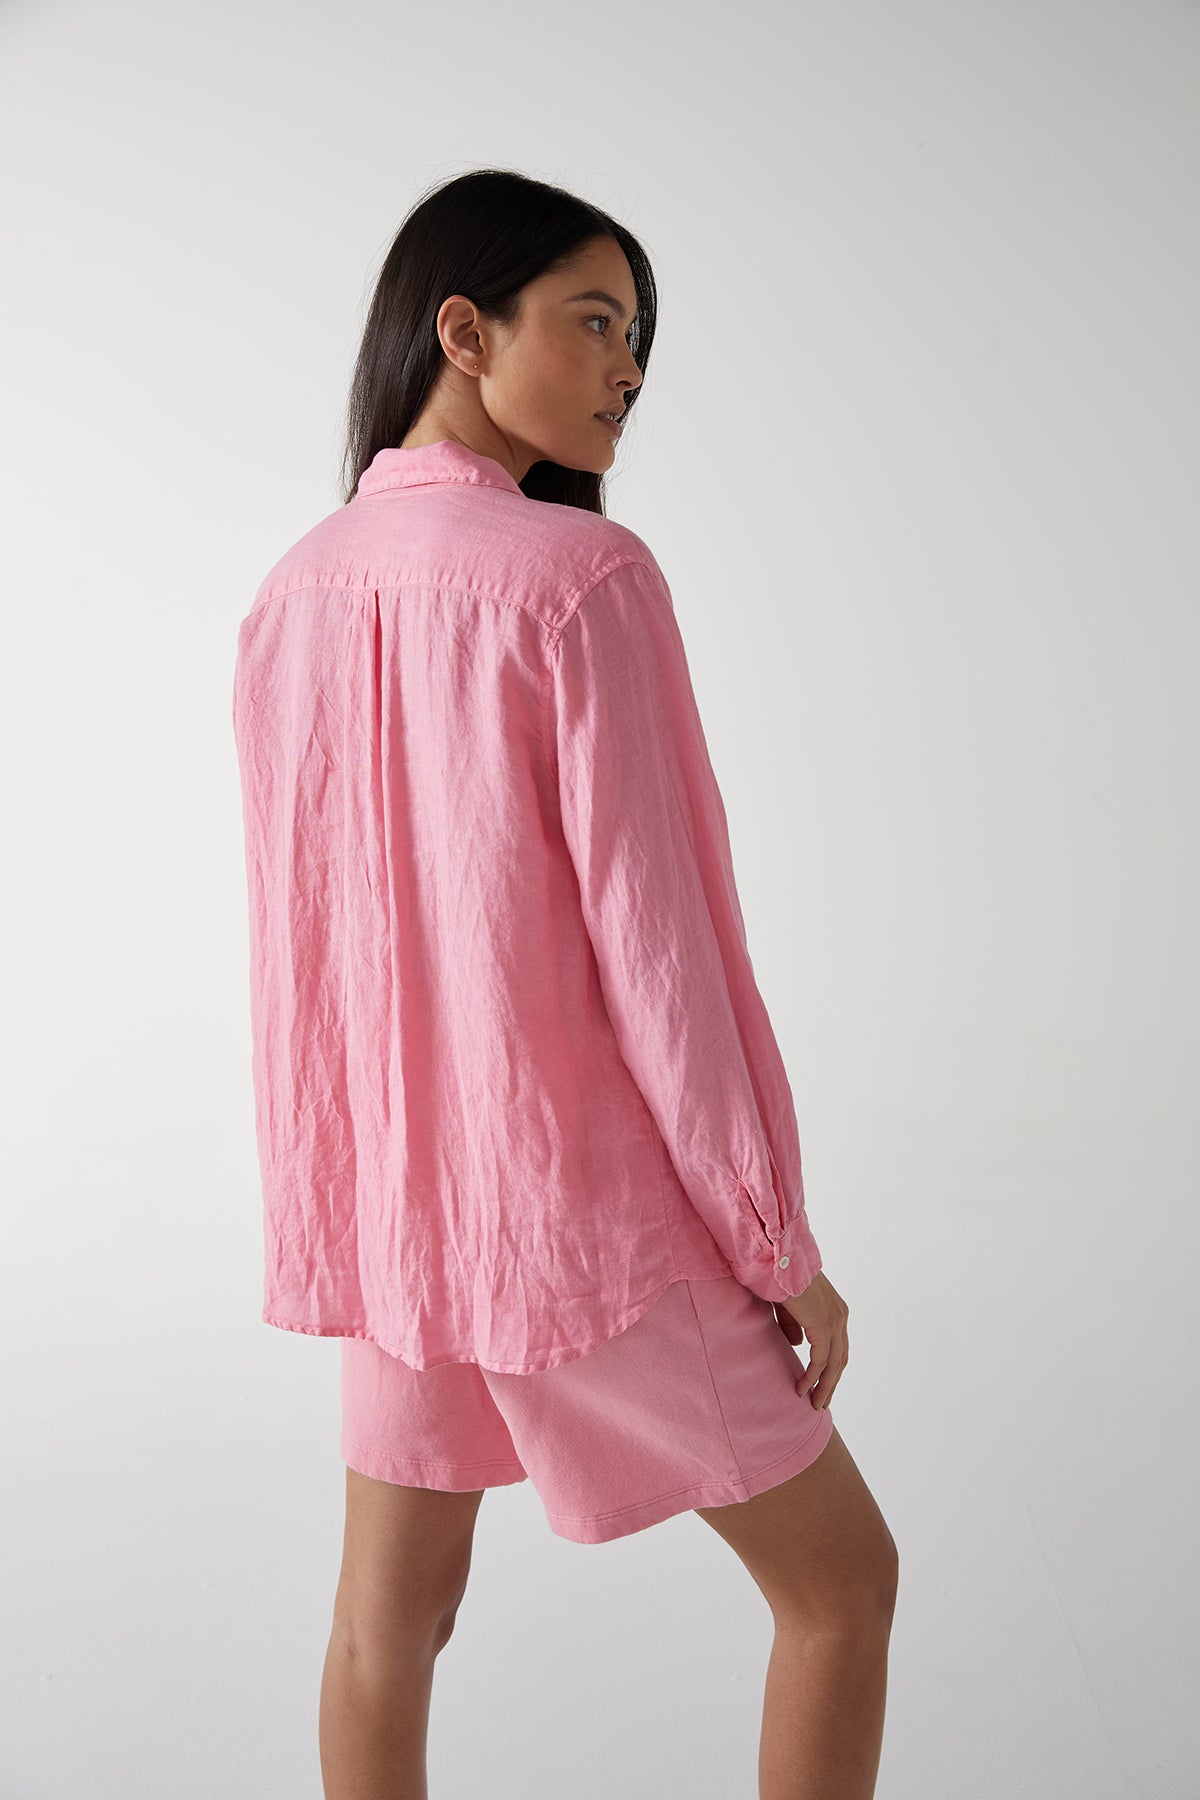   Mulholland shirt in cupid pink back & side 